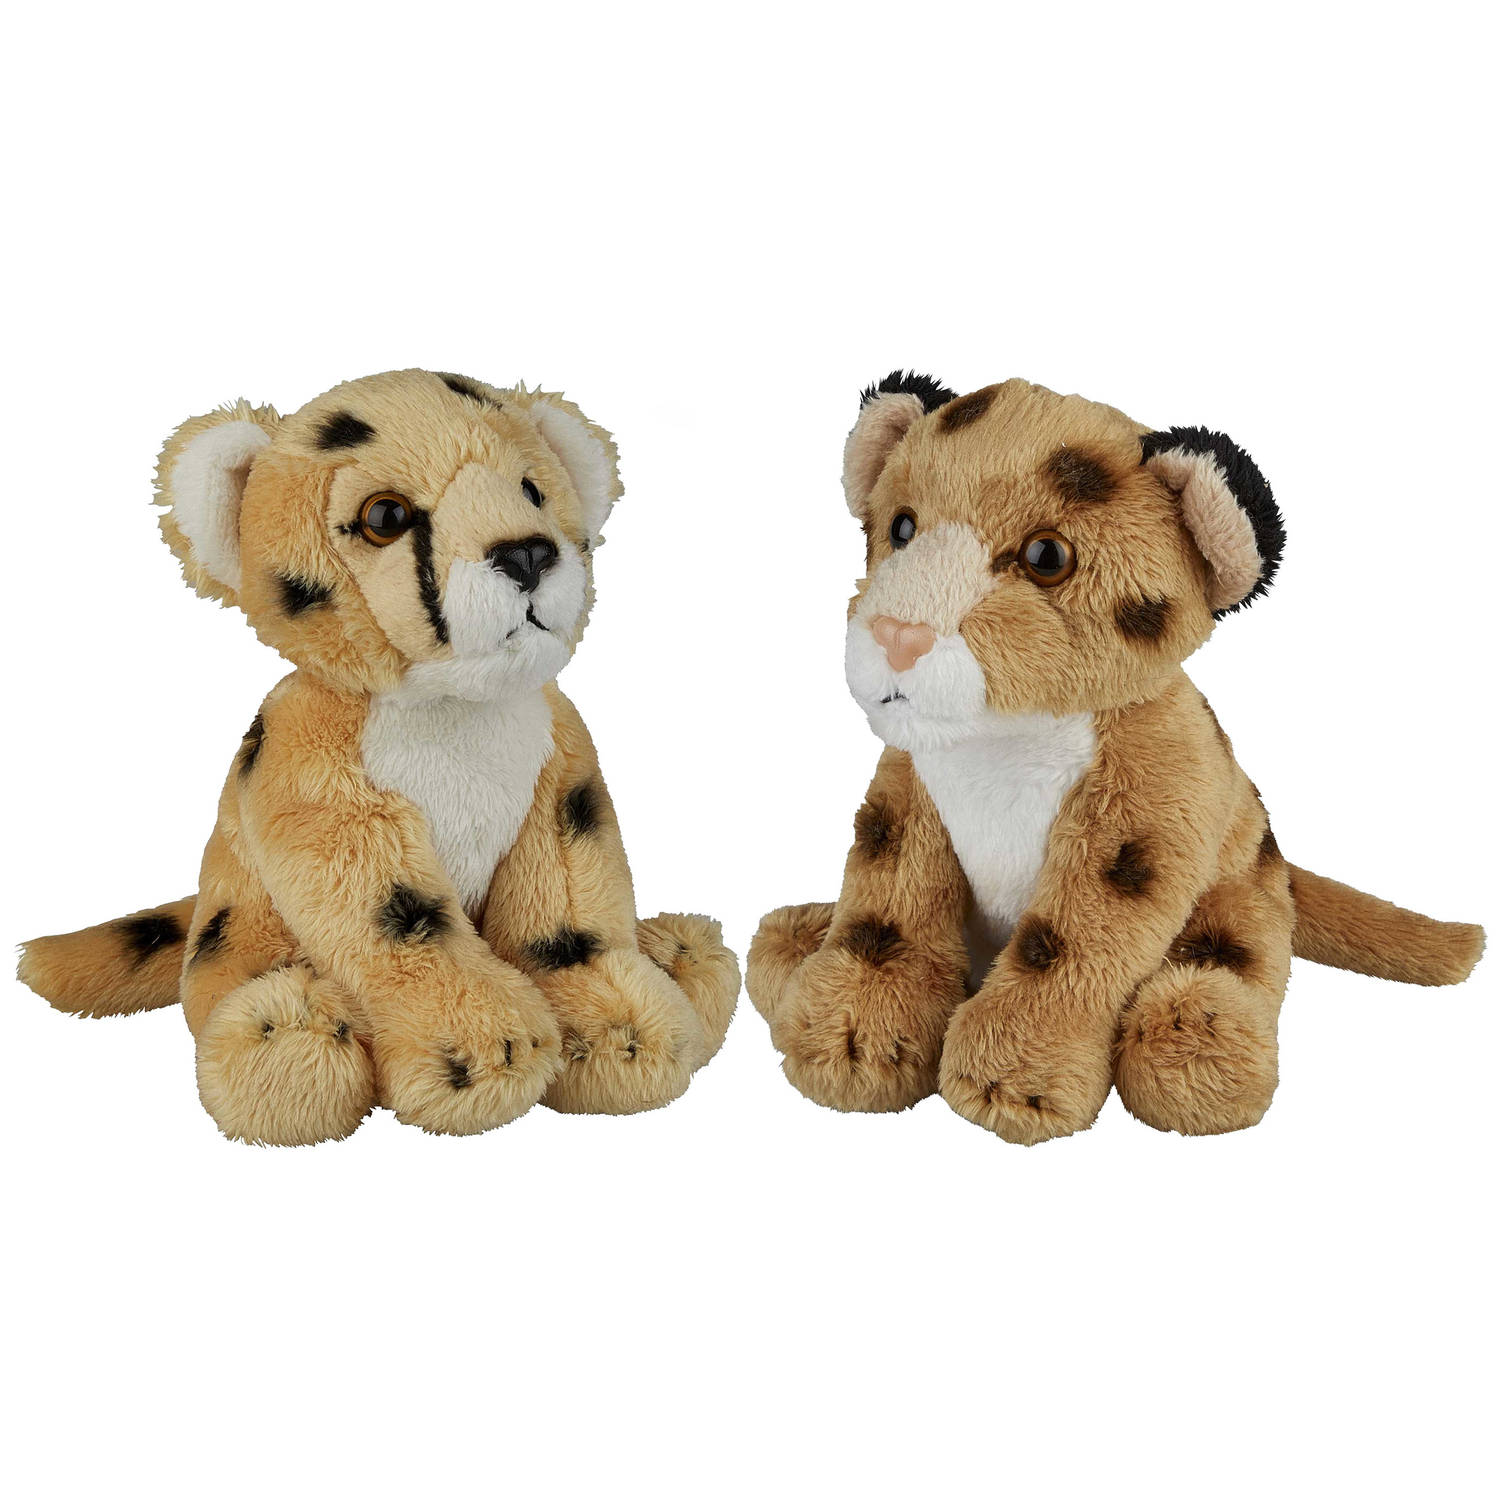 Safari Dieren Serie Pluche Knuffels 2x Stuks Cheetah En Luipaard Van 15 Cm Knuffeldier